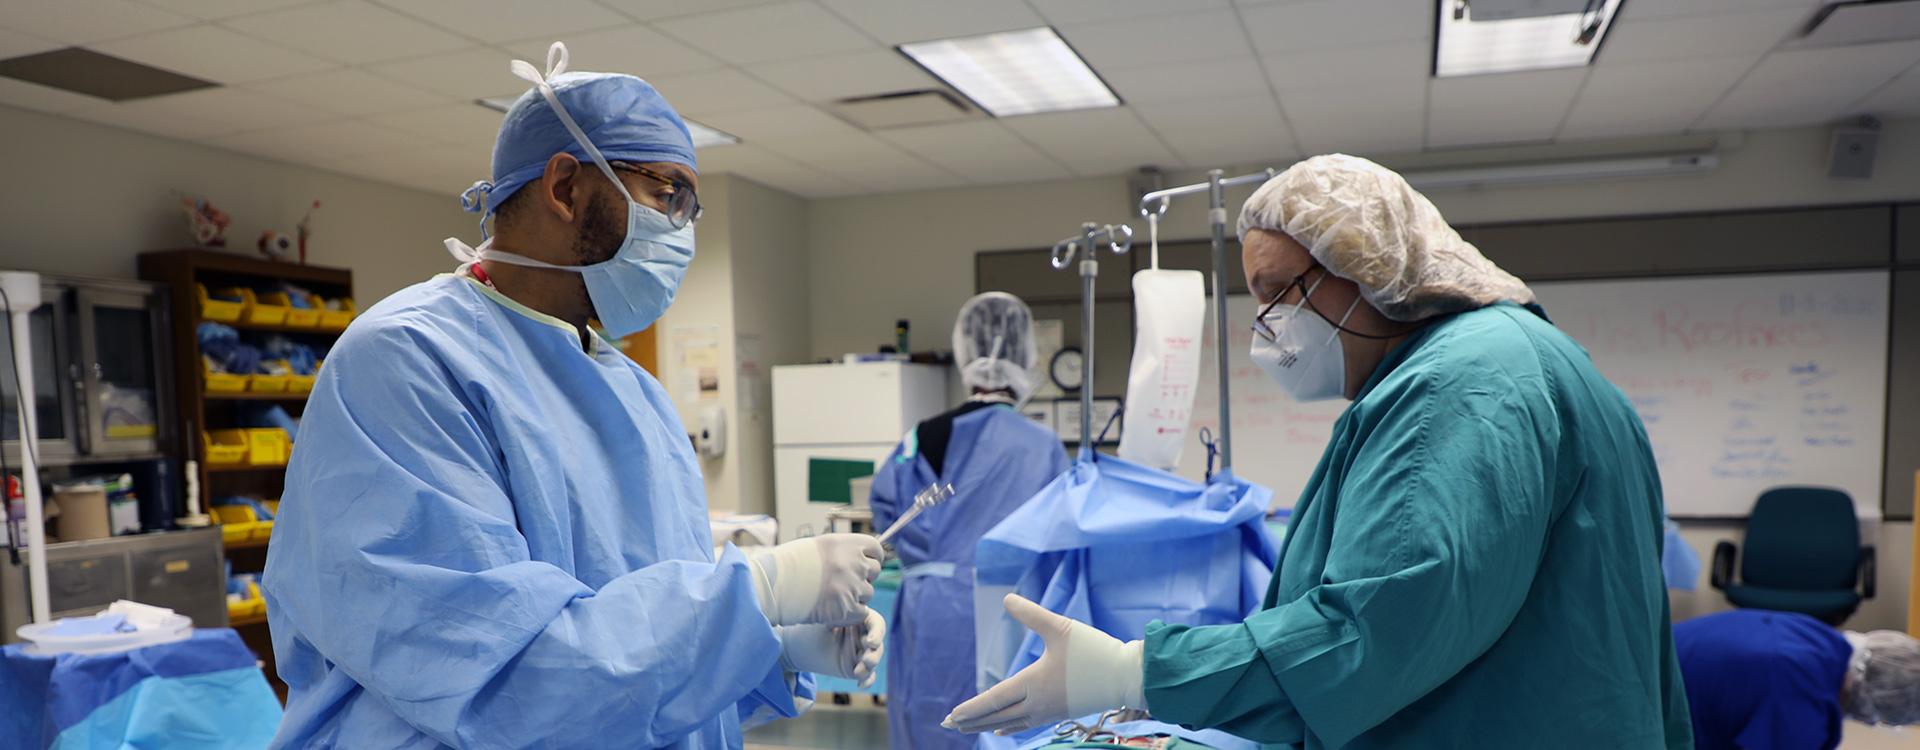 mock surgery where student passes scissors to "surgeon"